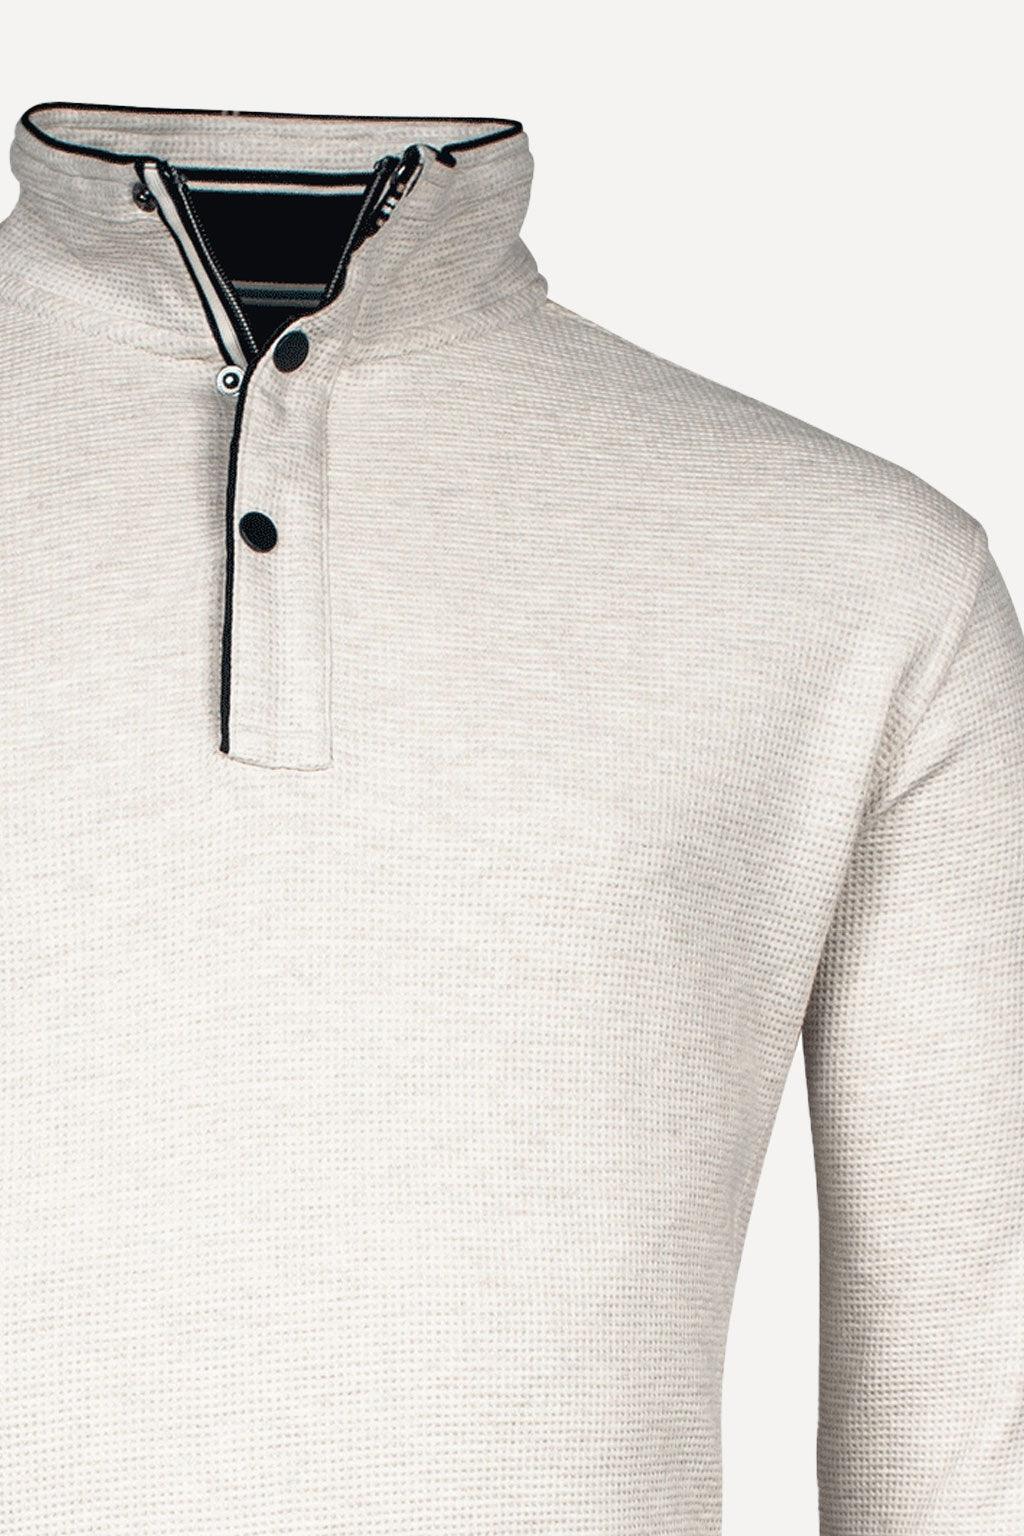 Baileys sweater - Big Boss | the menswear concept